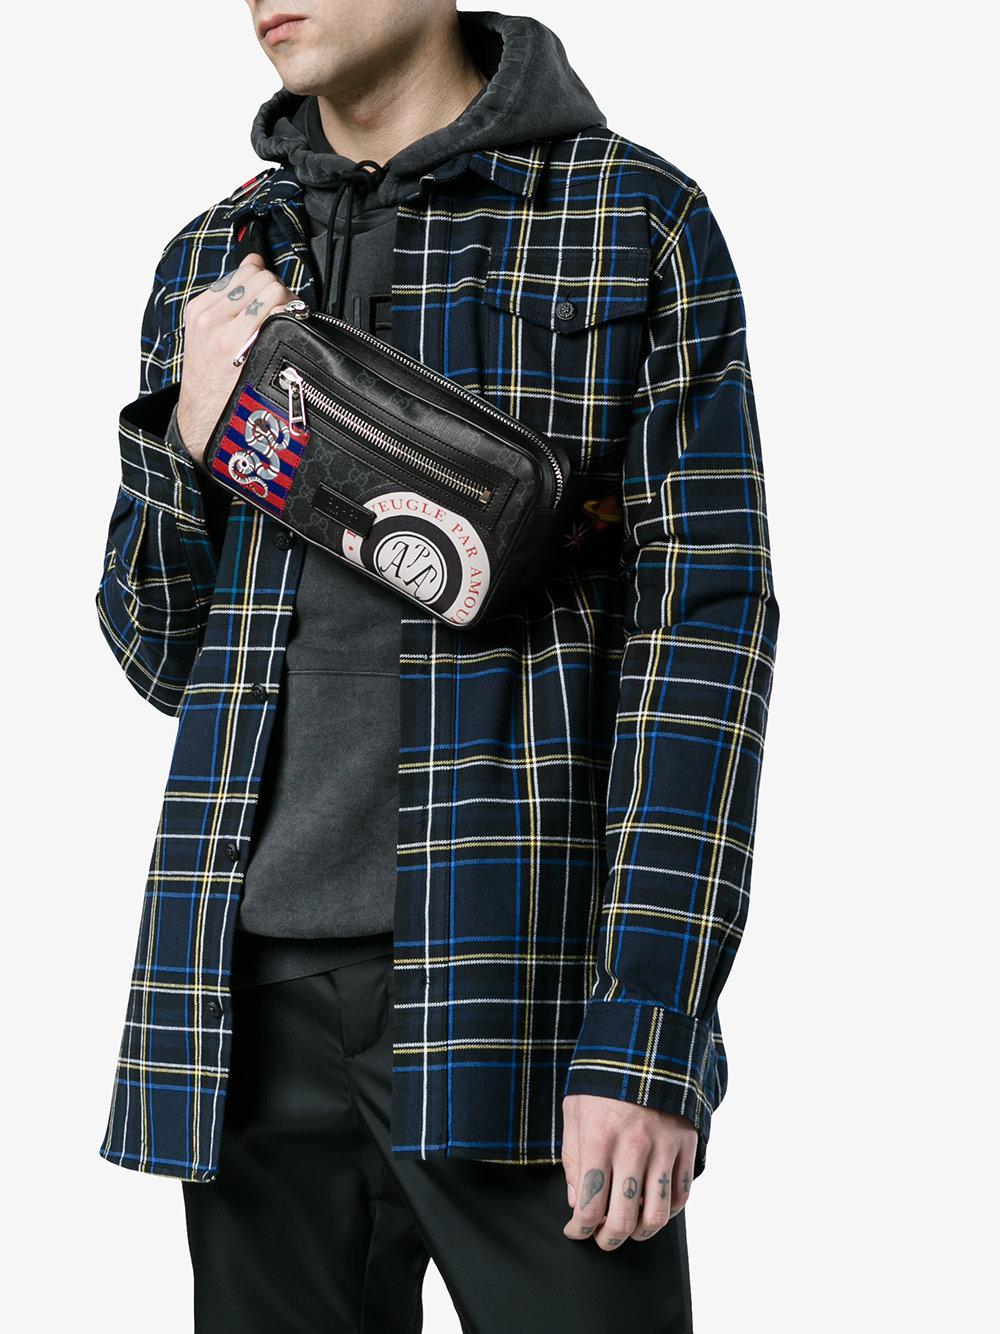 Gucci Leather Night Courrier Gg Supreme Belt Bag I in Black for Men - Lyst